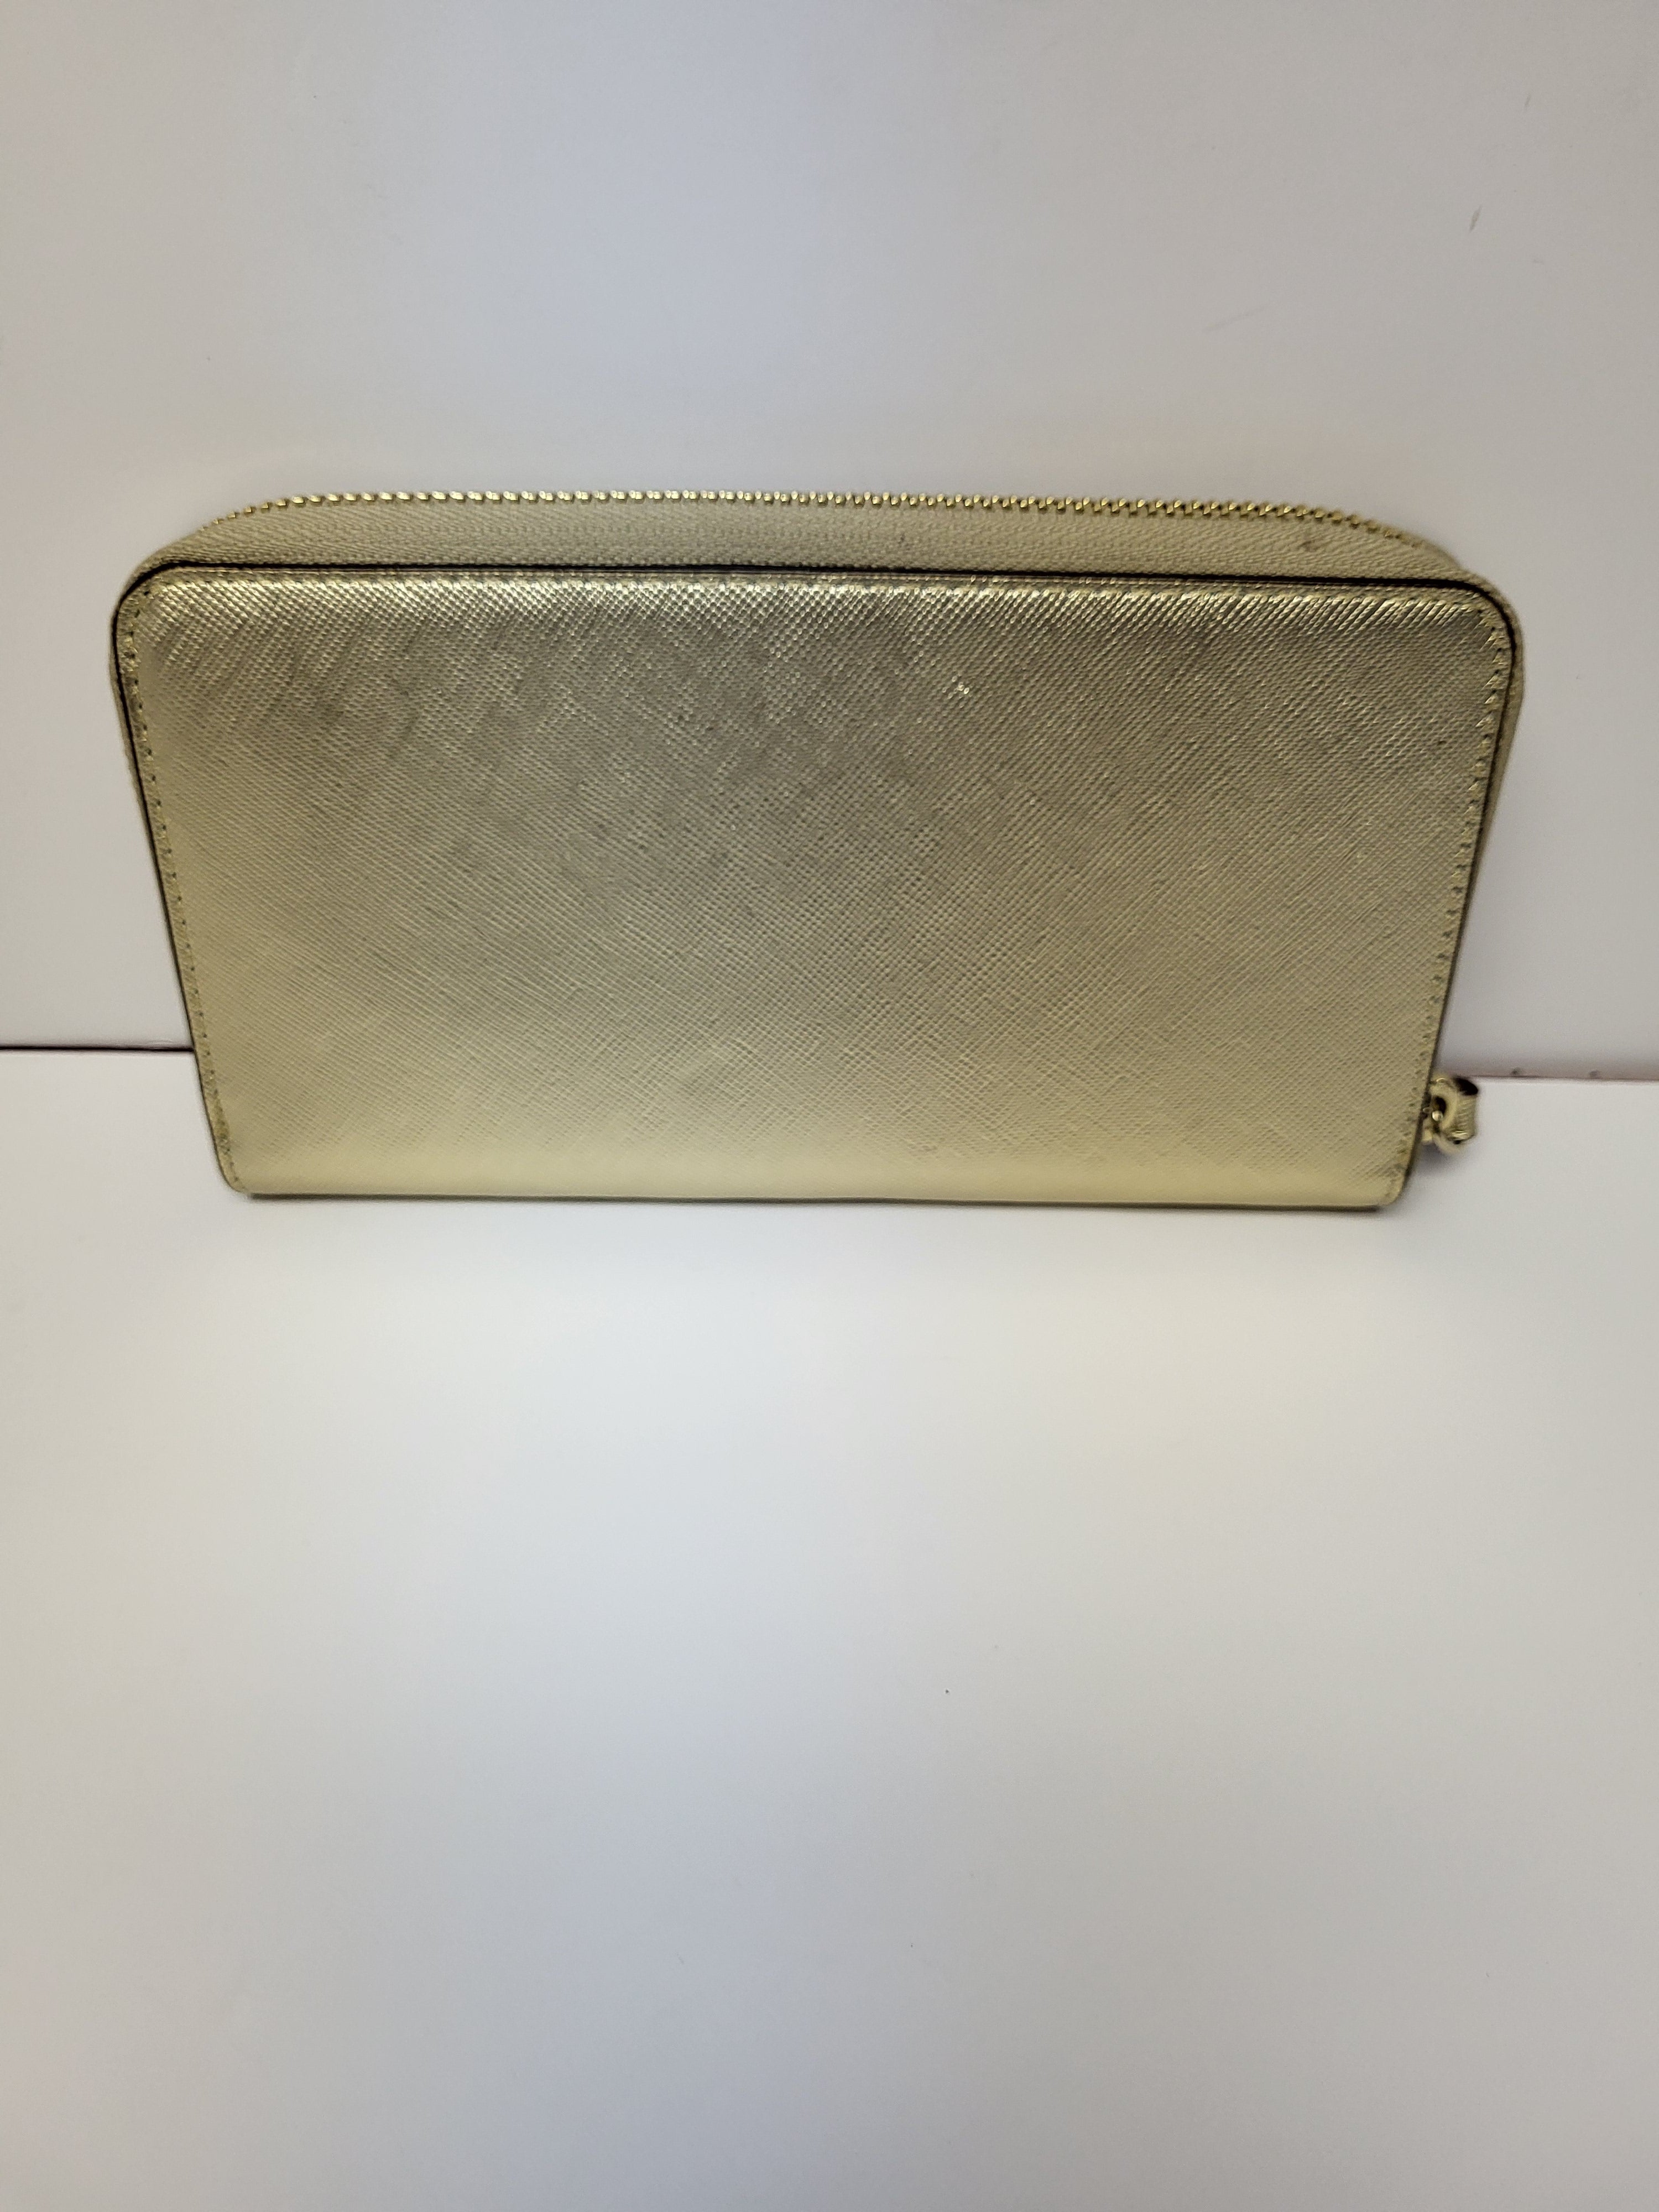 Kate Spade Gold Leather Wristlet Wallet